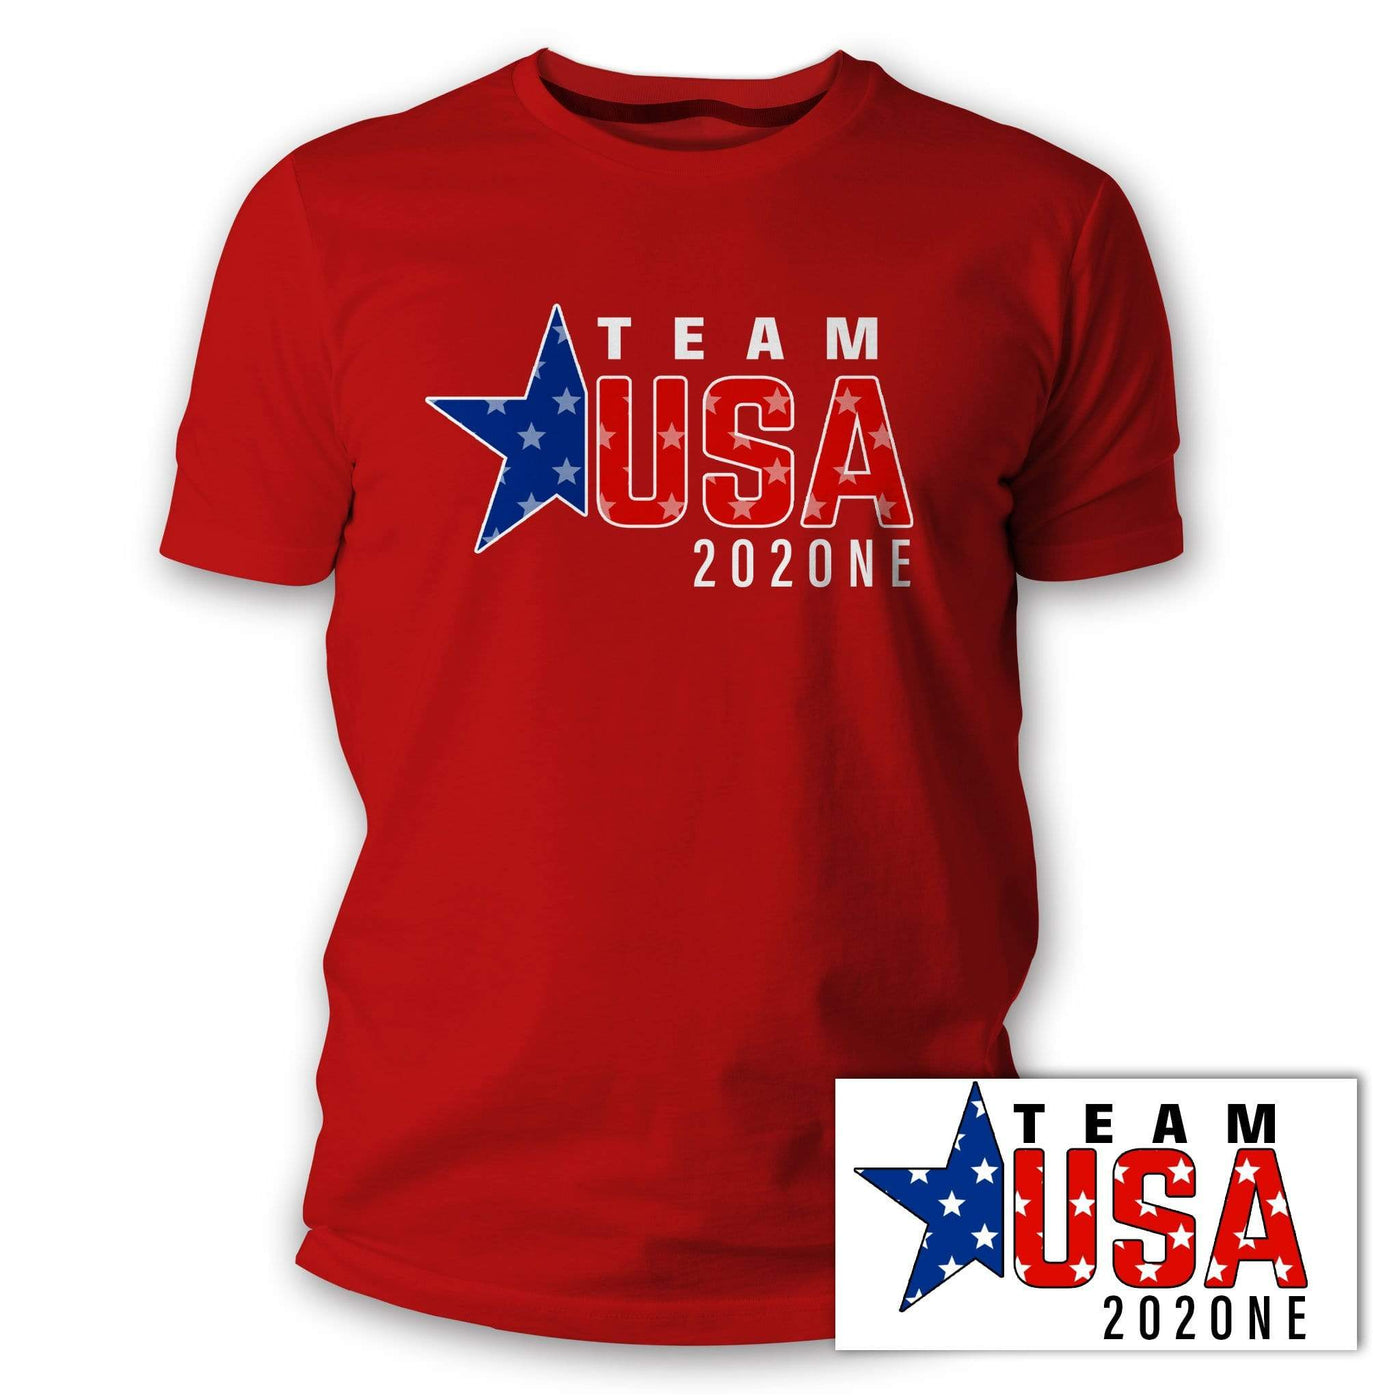 Team USA Red T Shirt with Vinyl Sticker